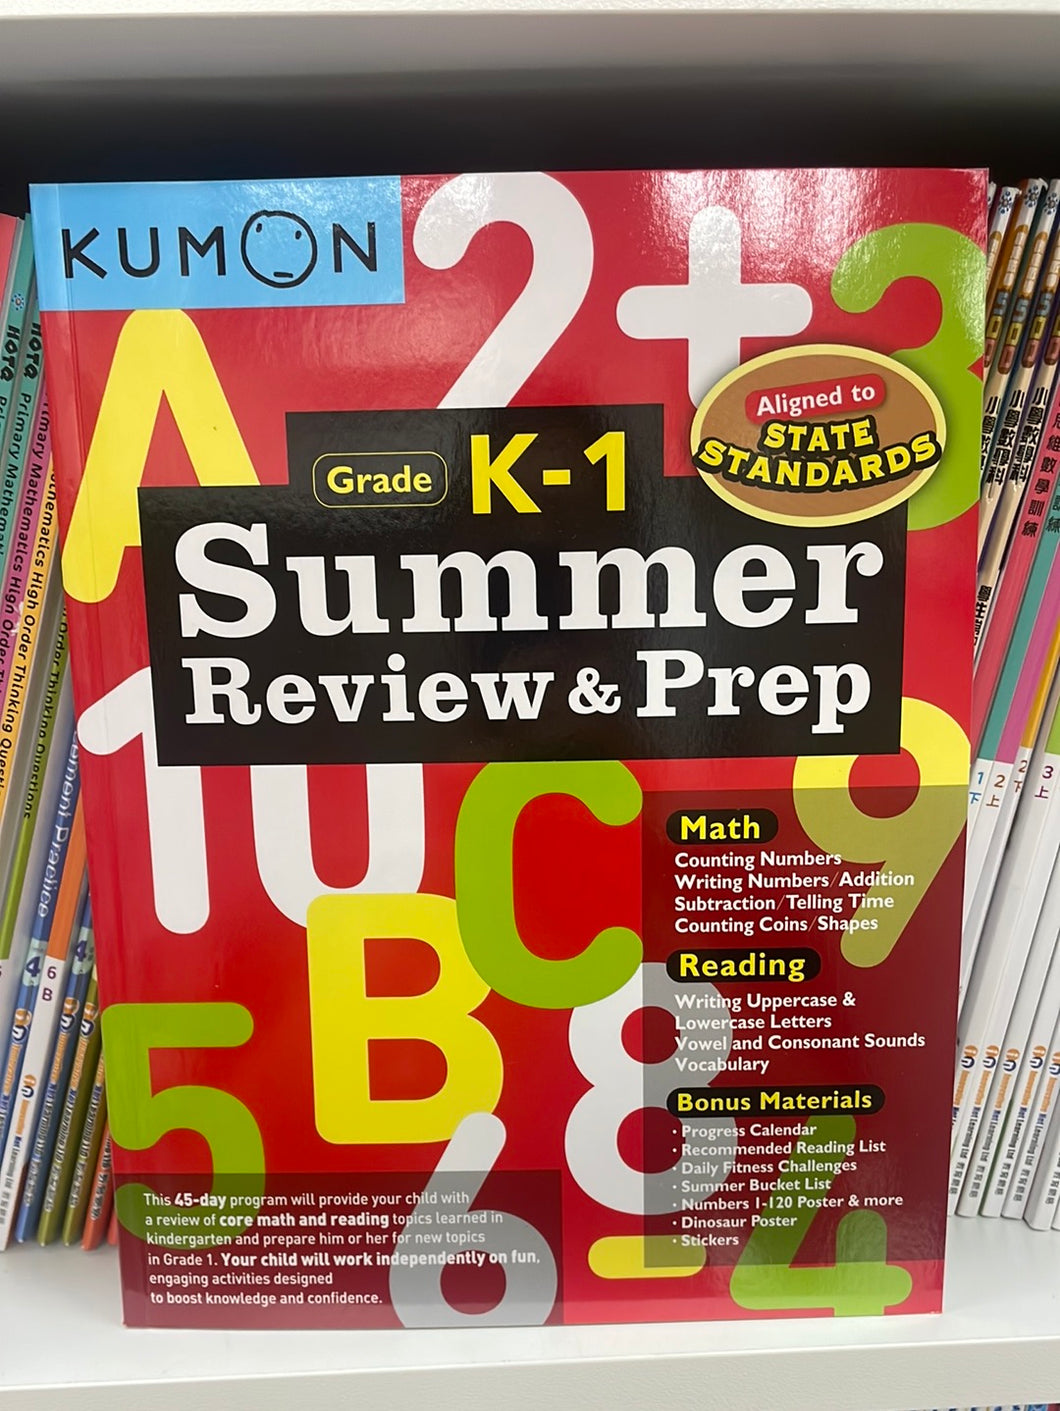 Kumon summer review grade K-1